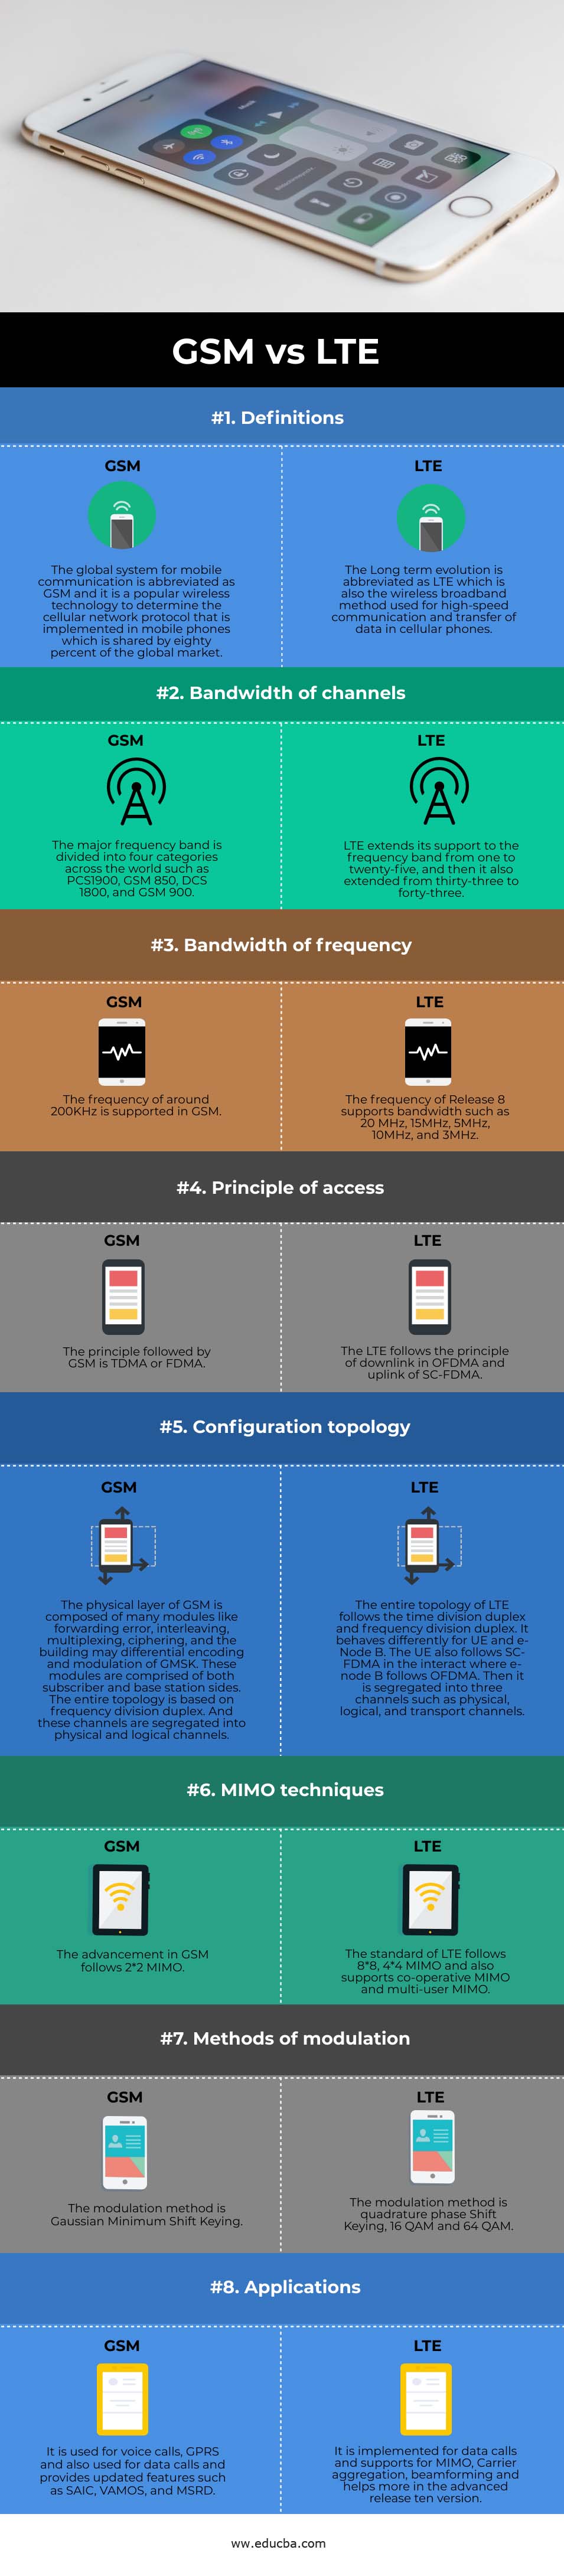 GSM vs LTE info